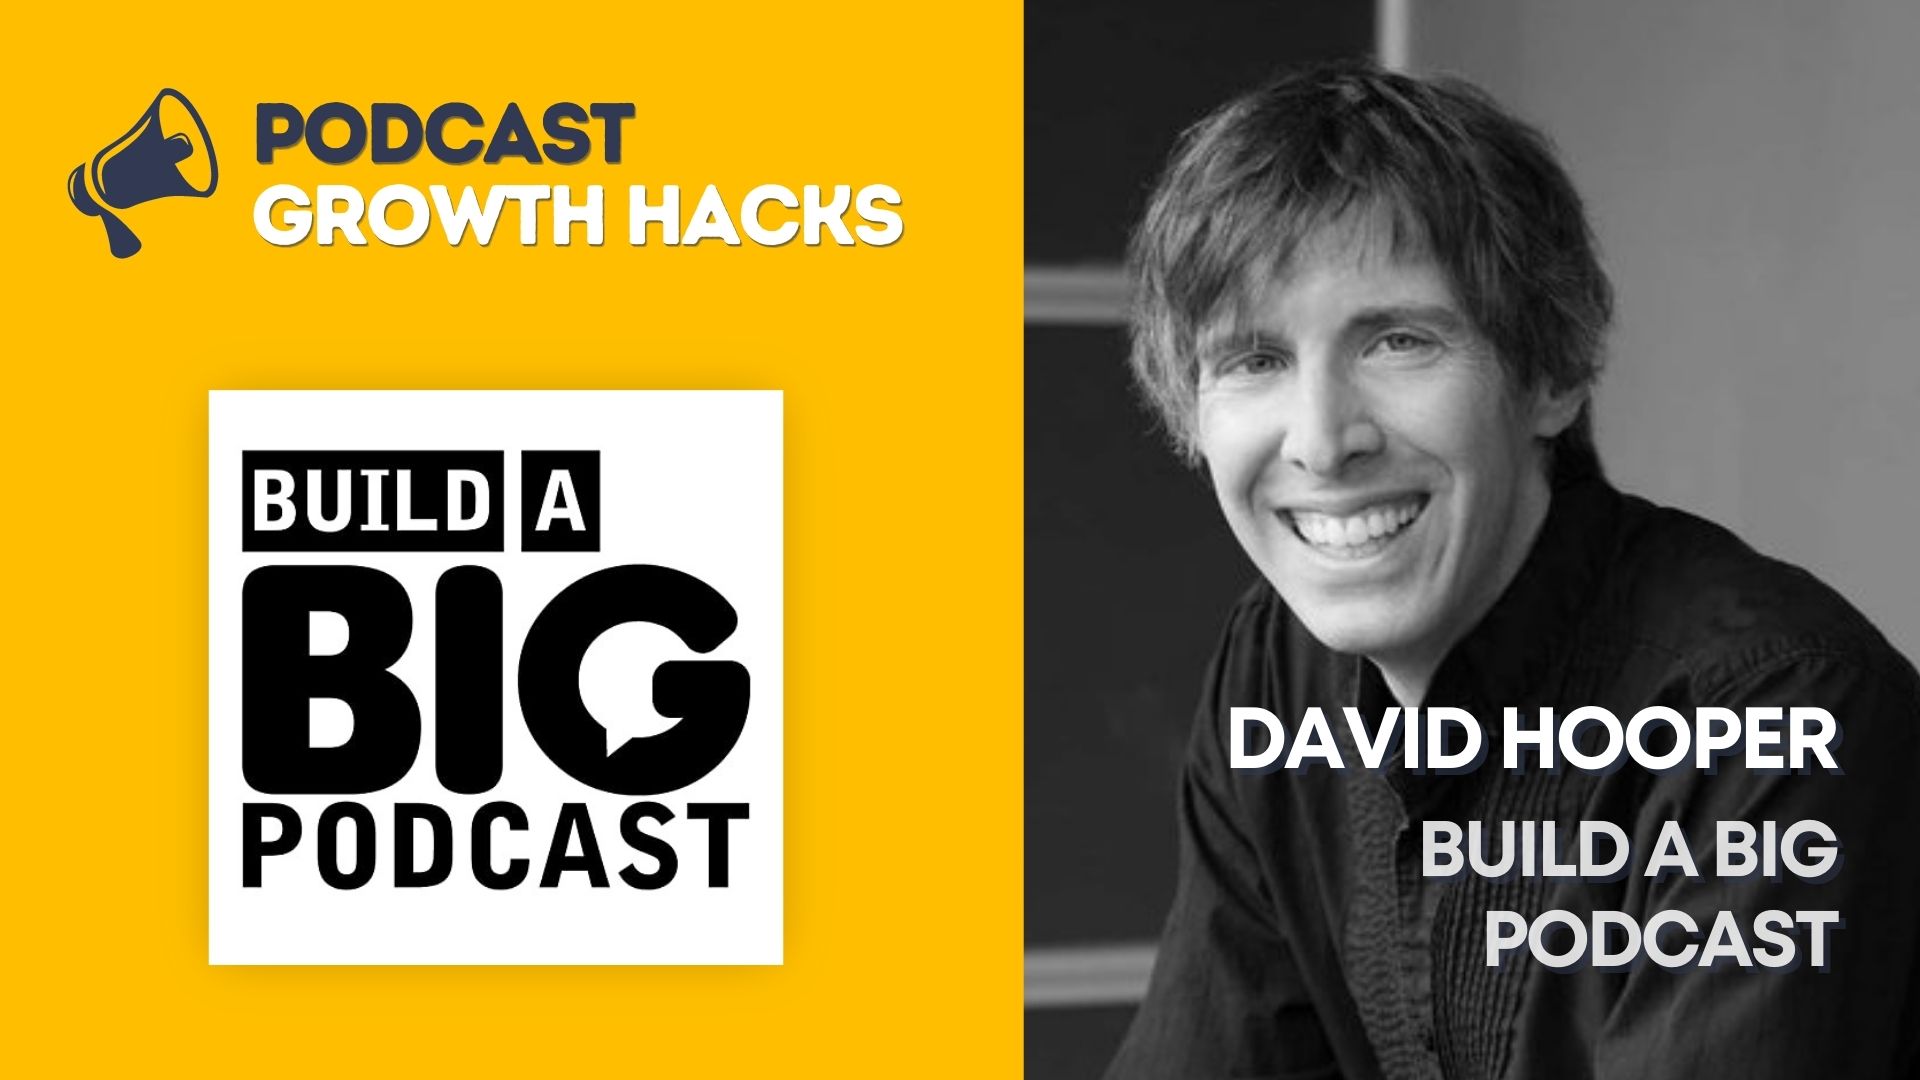 David Hooper - Build a Big Podcast - Podcast Growth Hacks